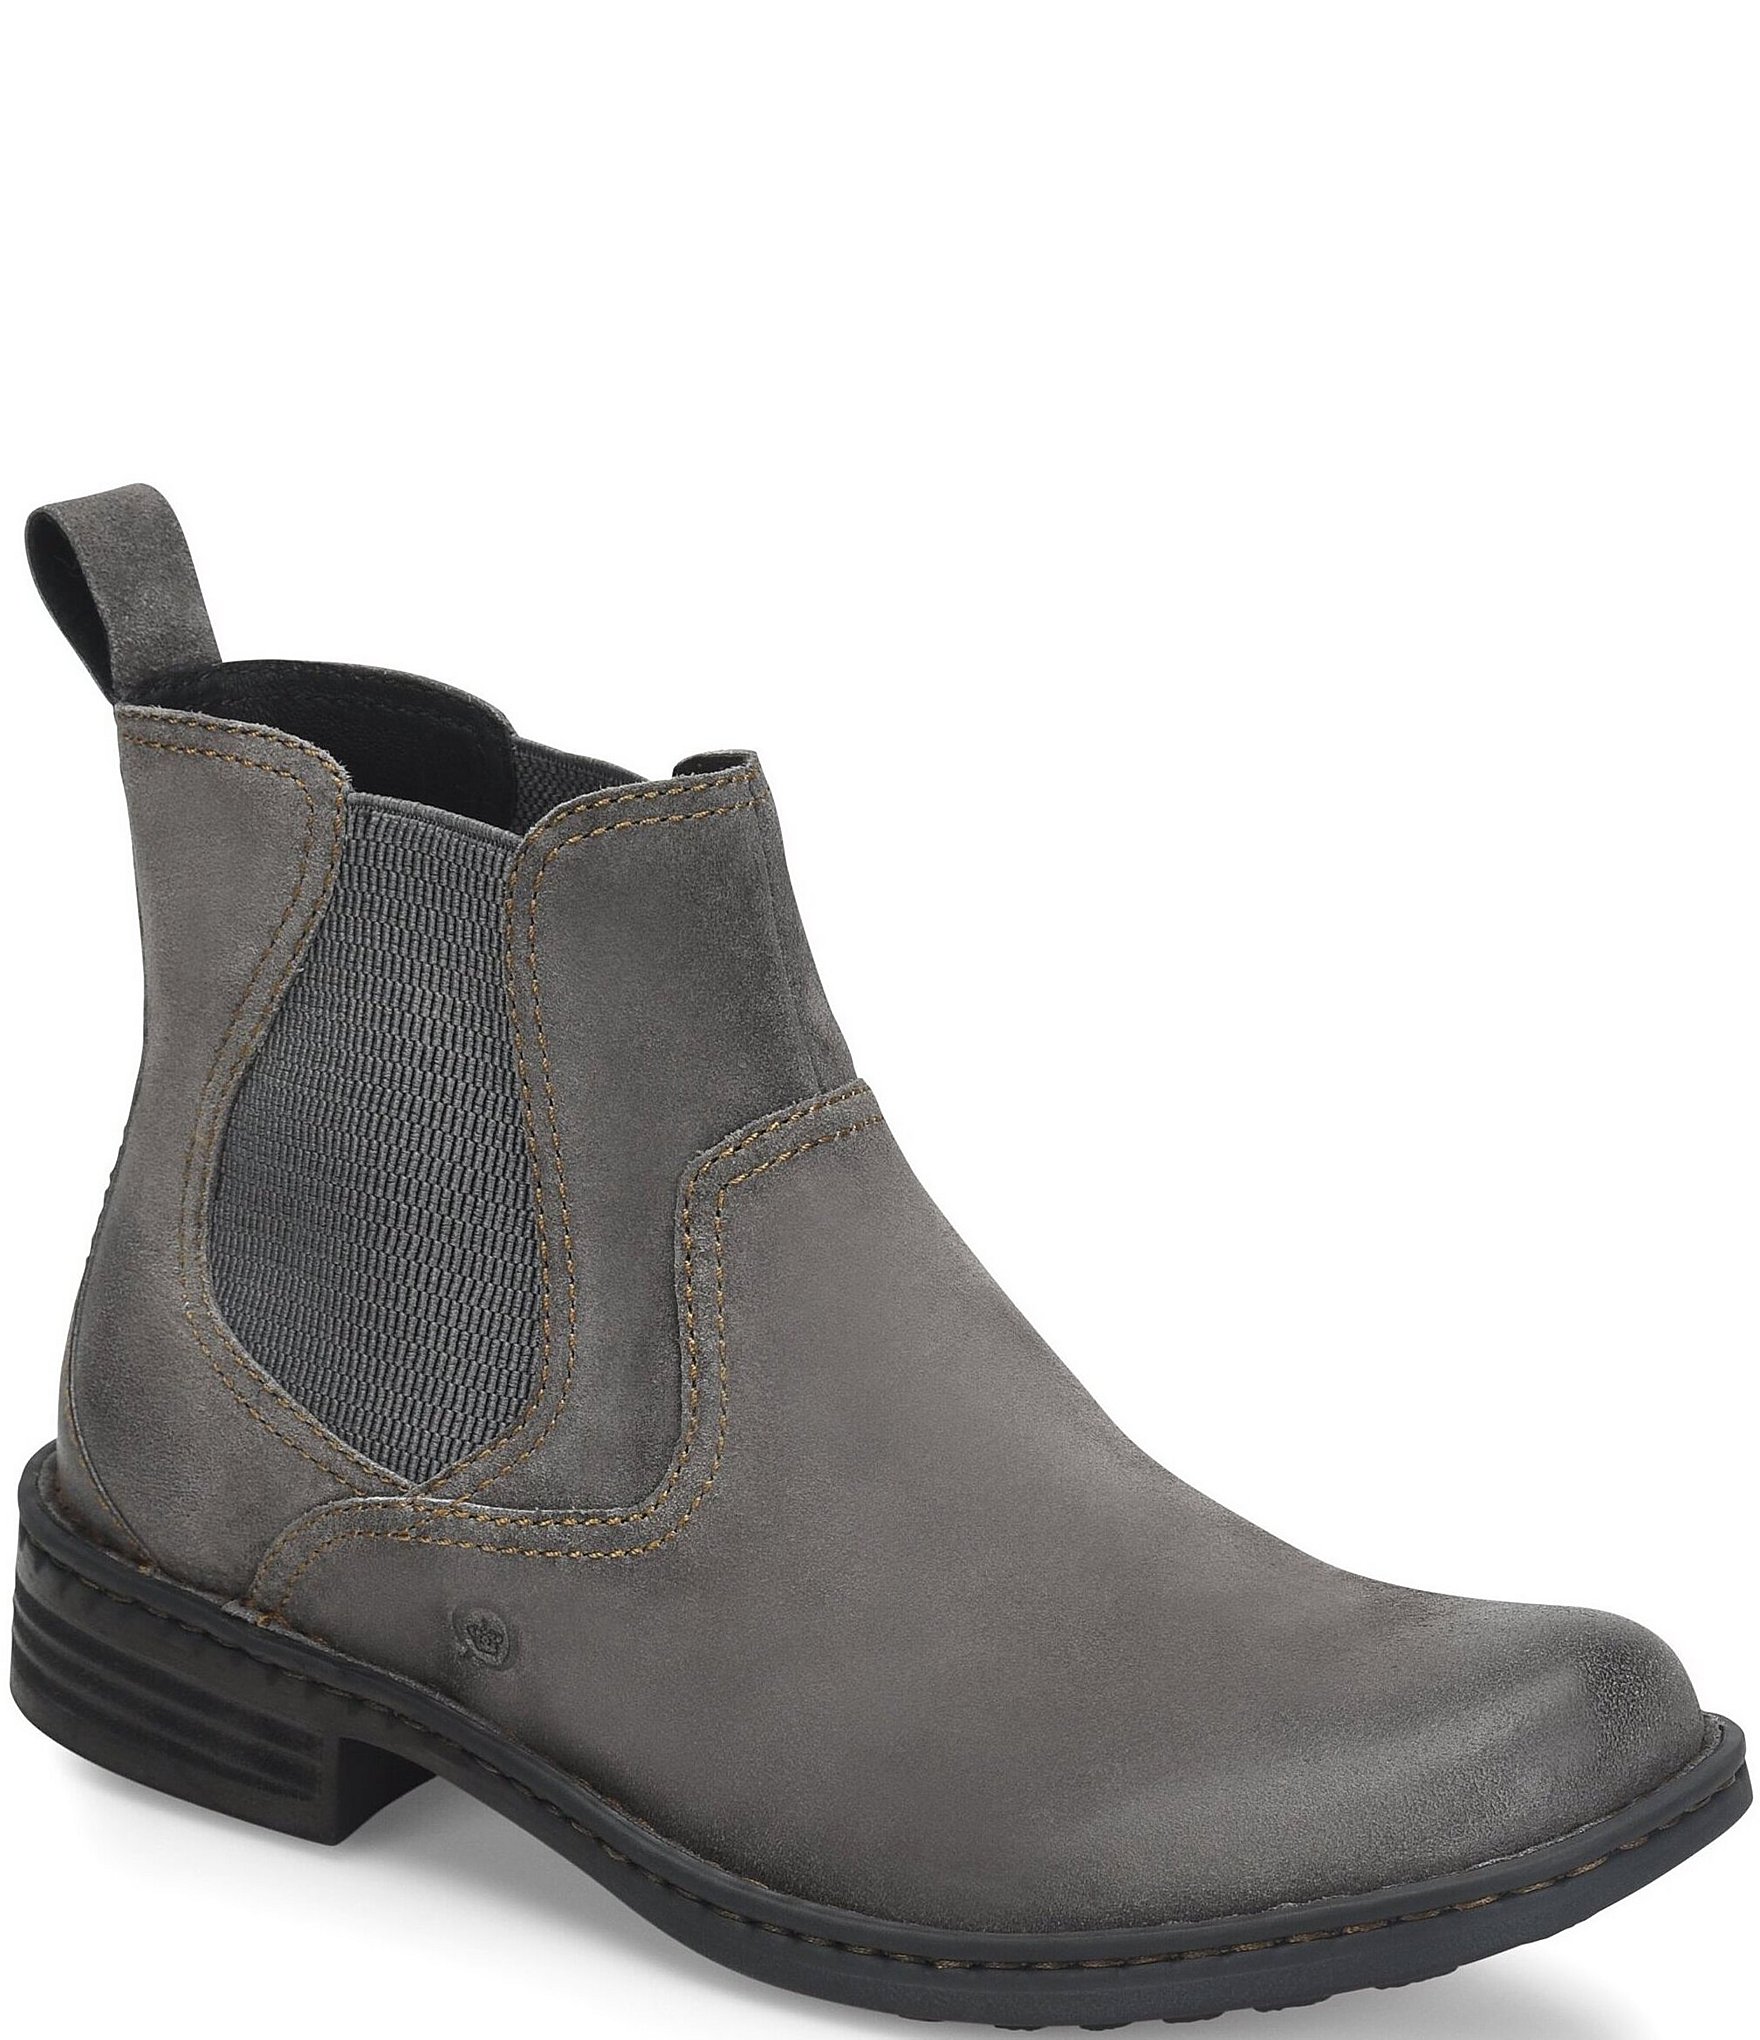 So-called haze select Grey Men's Boots | Dillard's